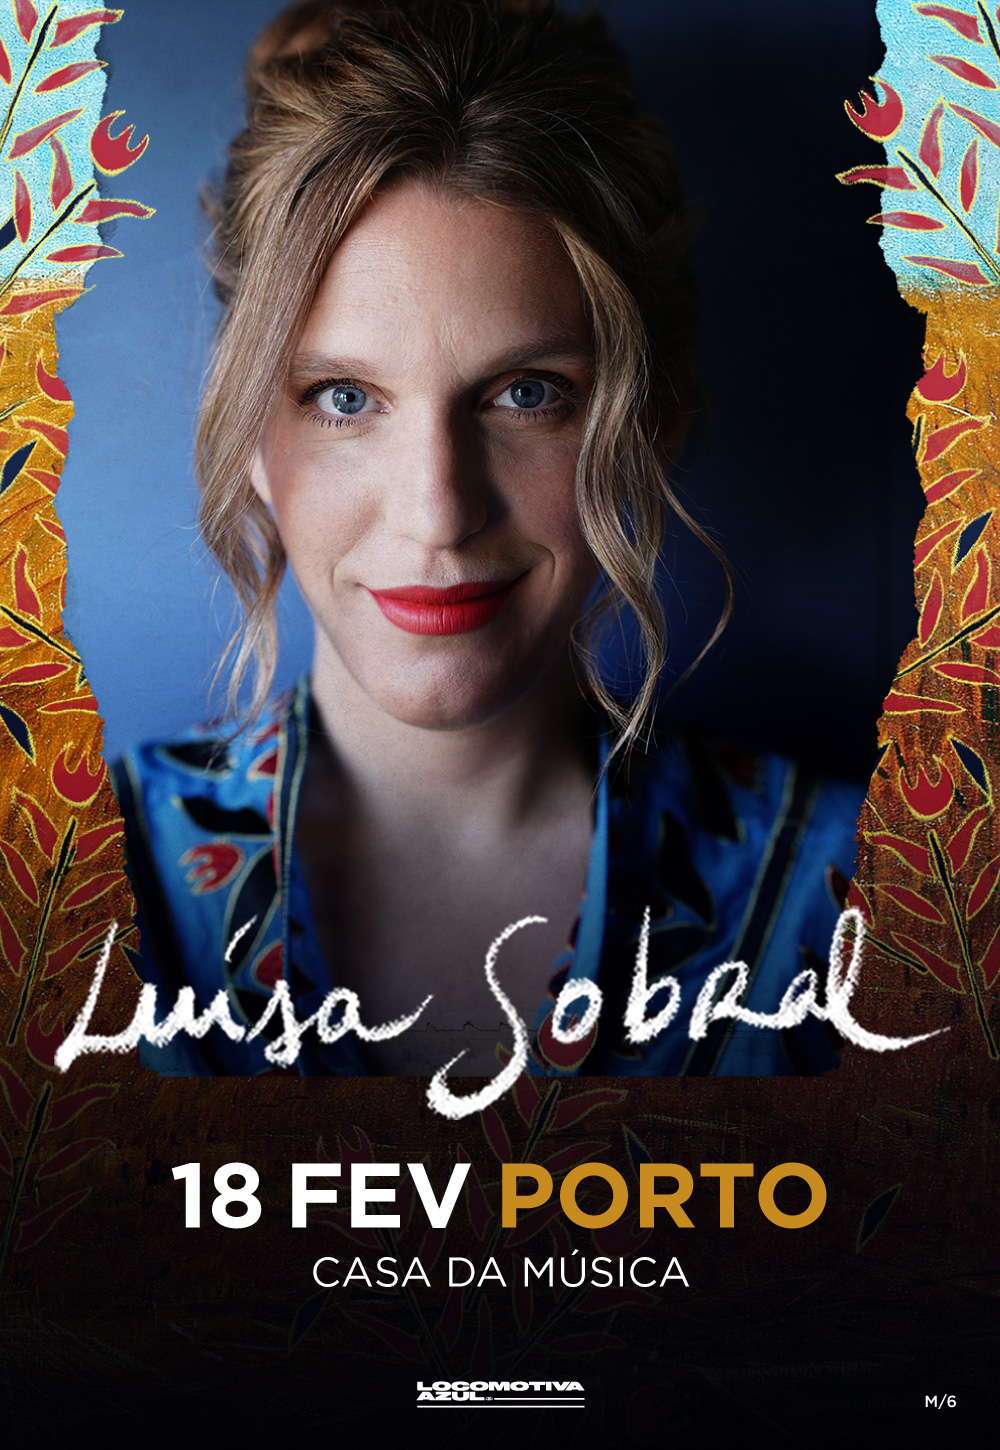 Luísa Sobral – 18 FEV, Casa da Música (Porto)